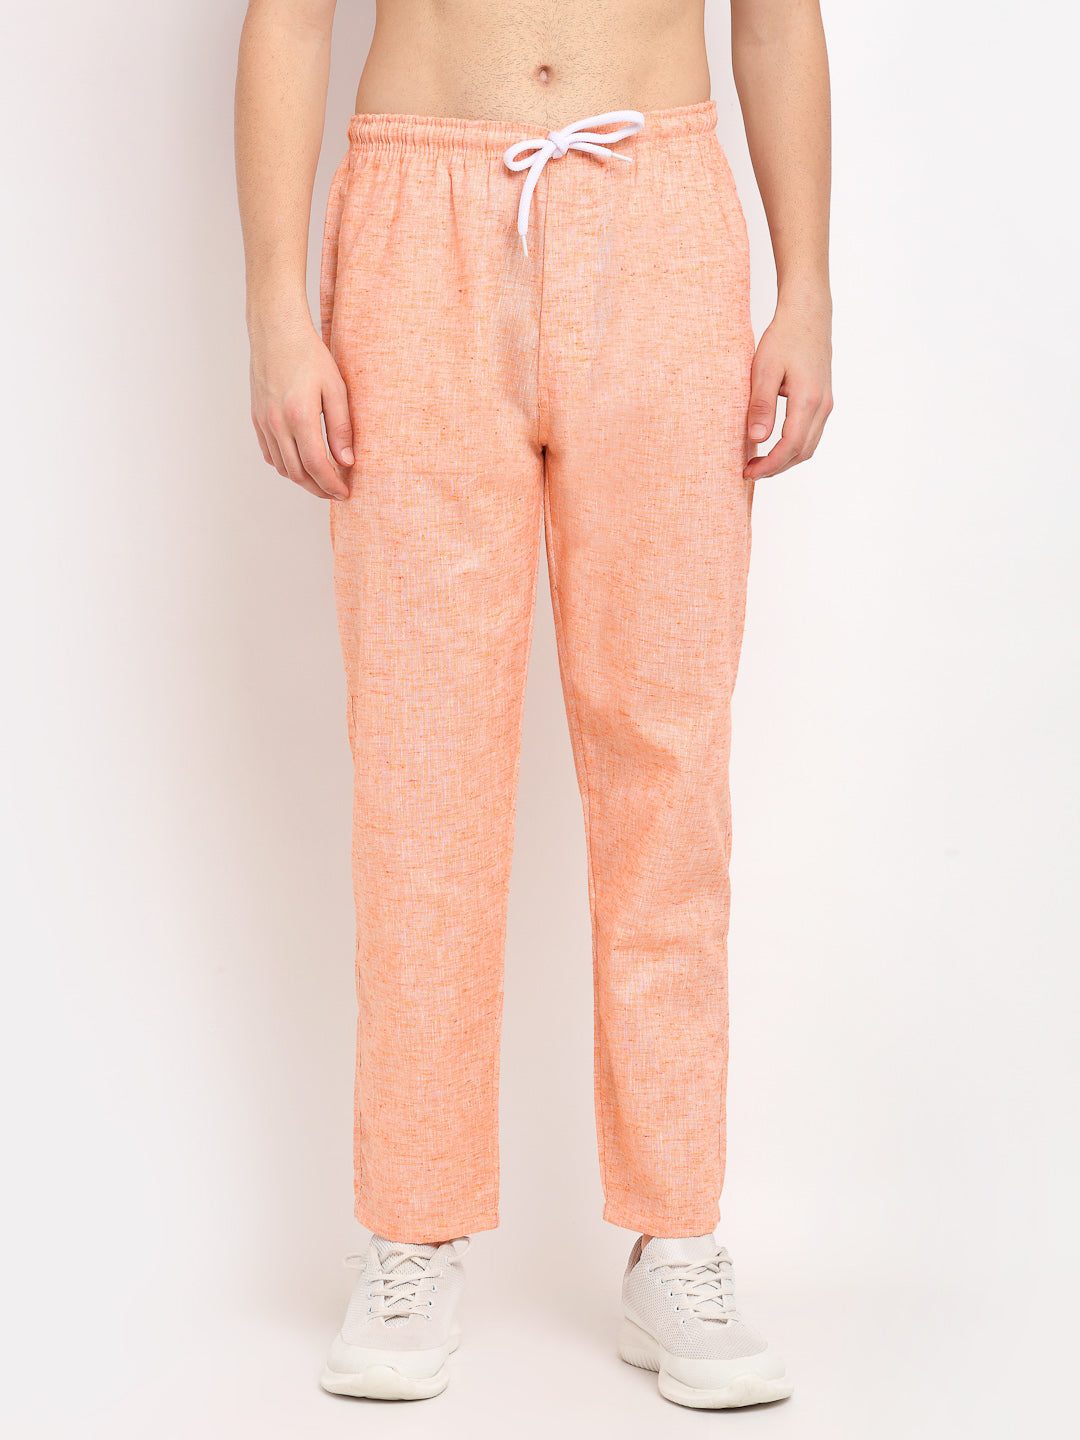 Men's Orange Linen Cotton Track Pants ( JOG 021Orange ) - Jainish